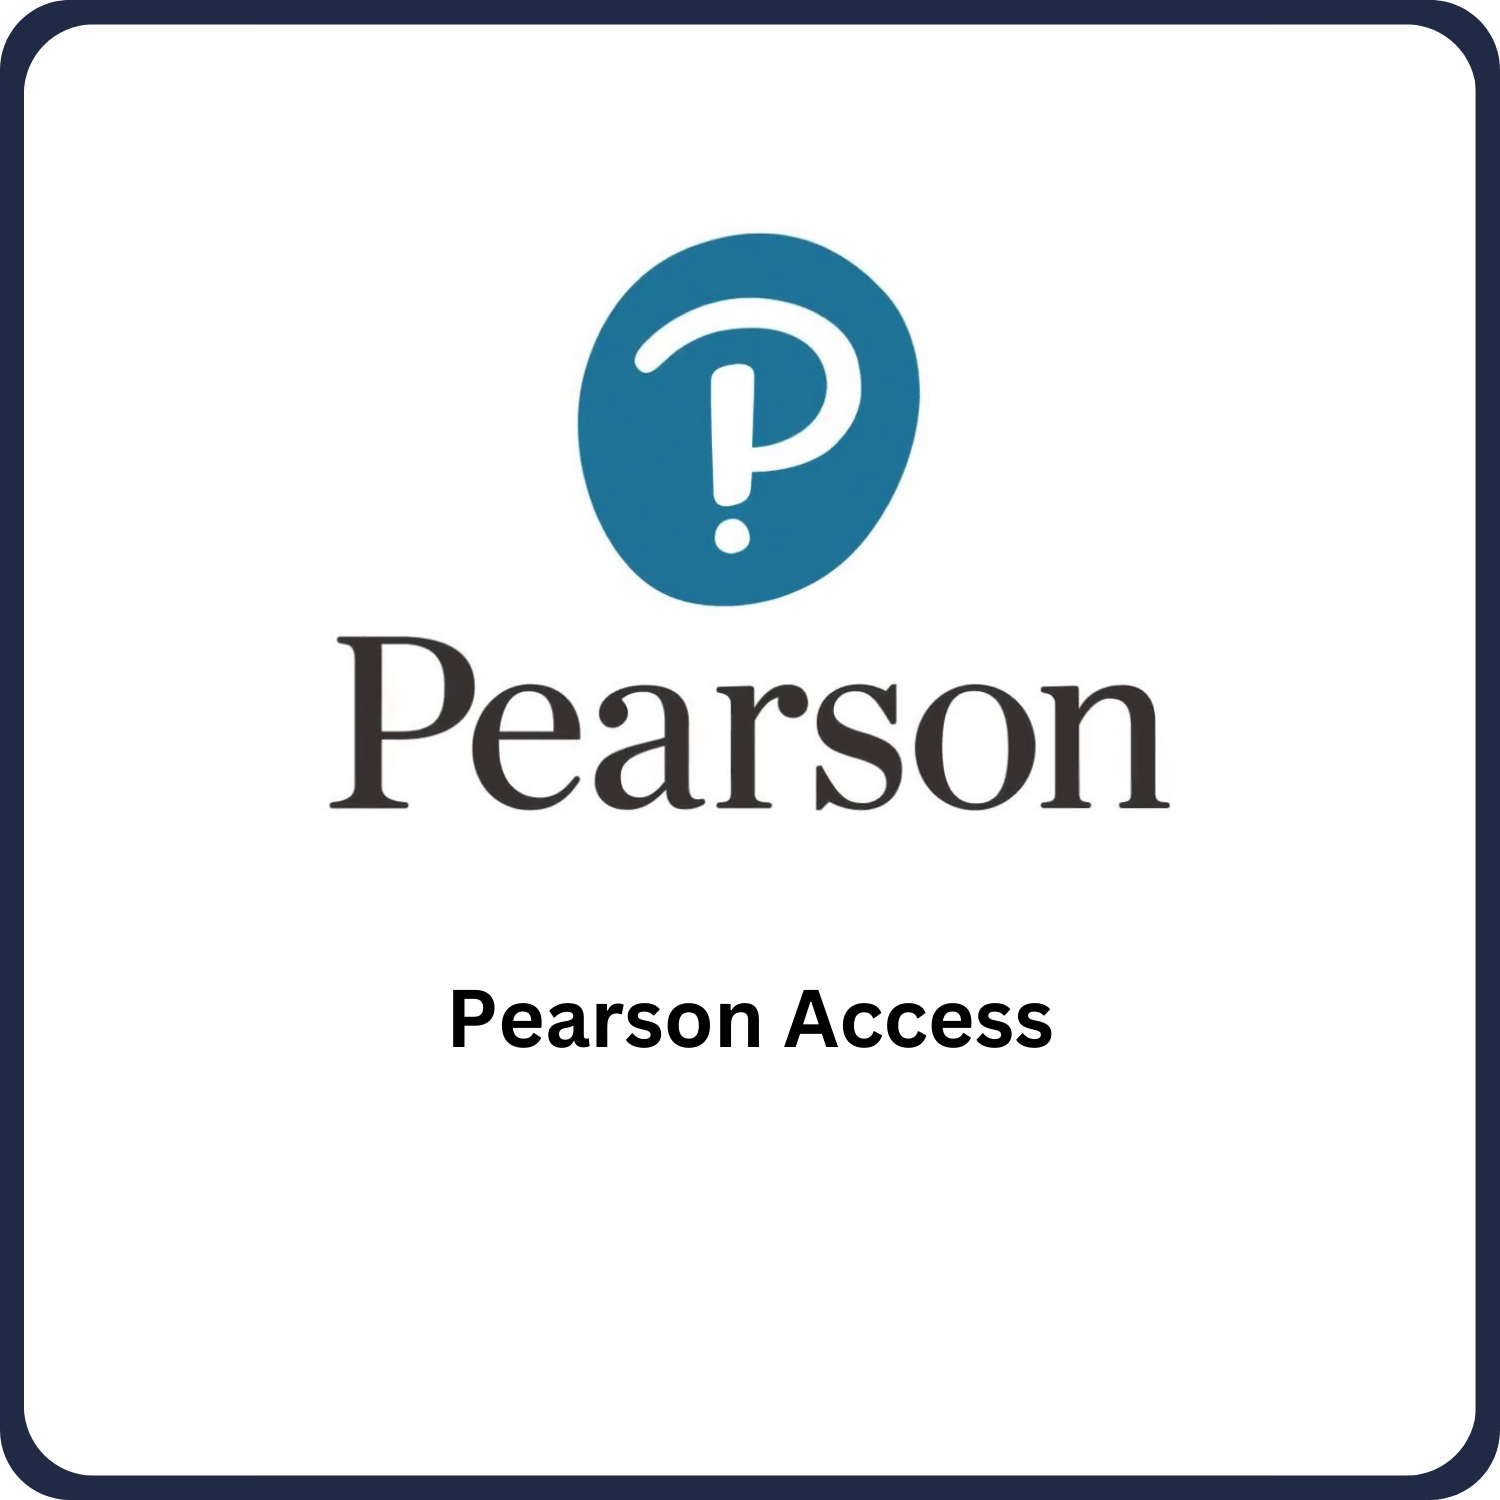 Pearson Access